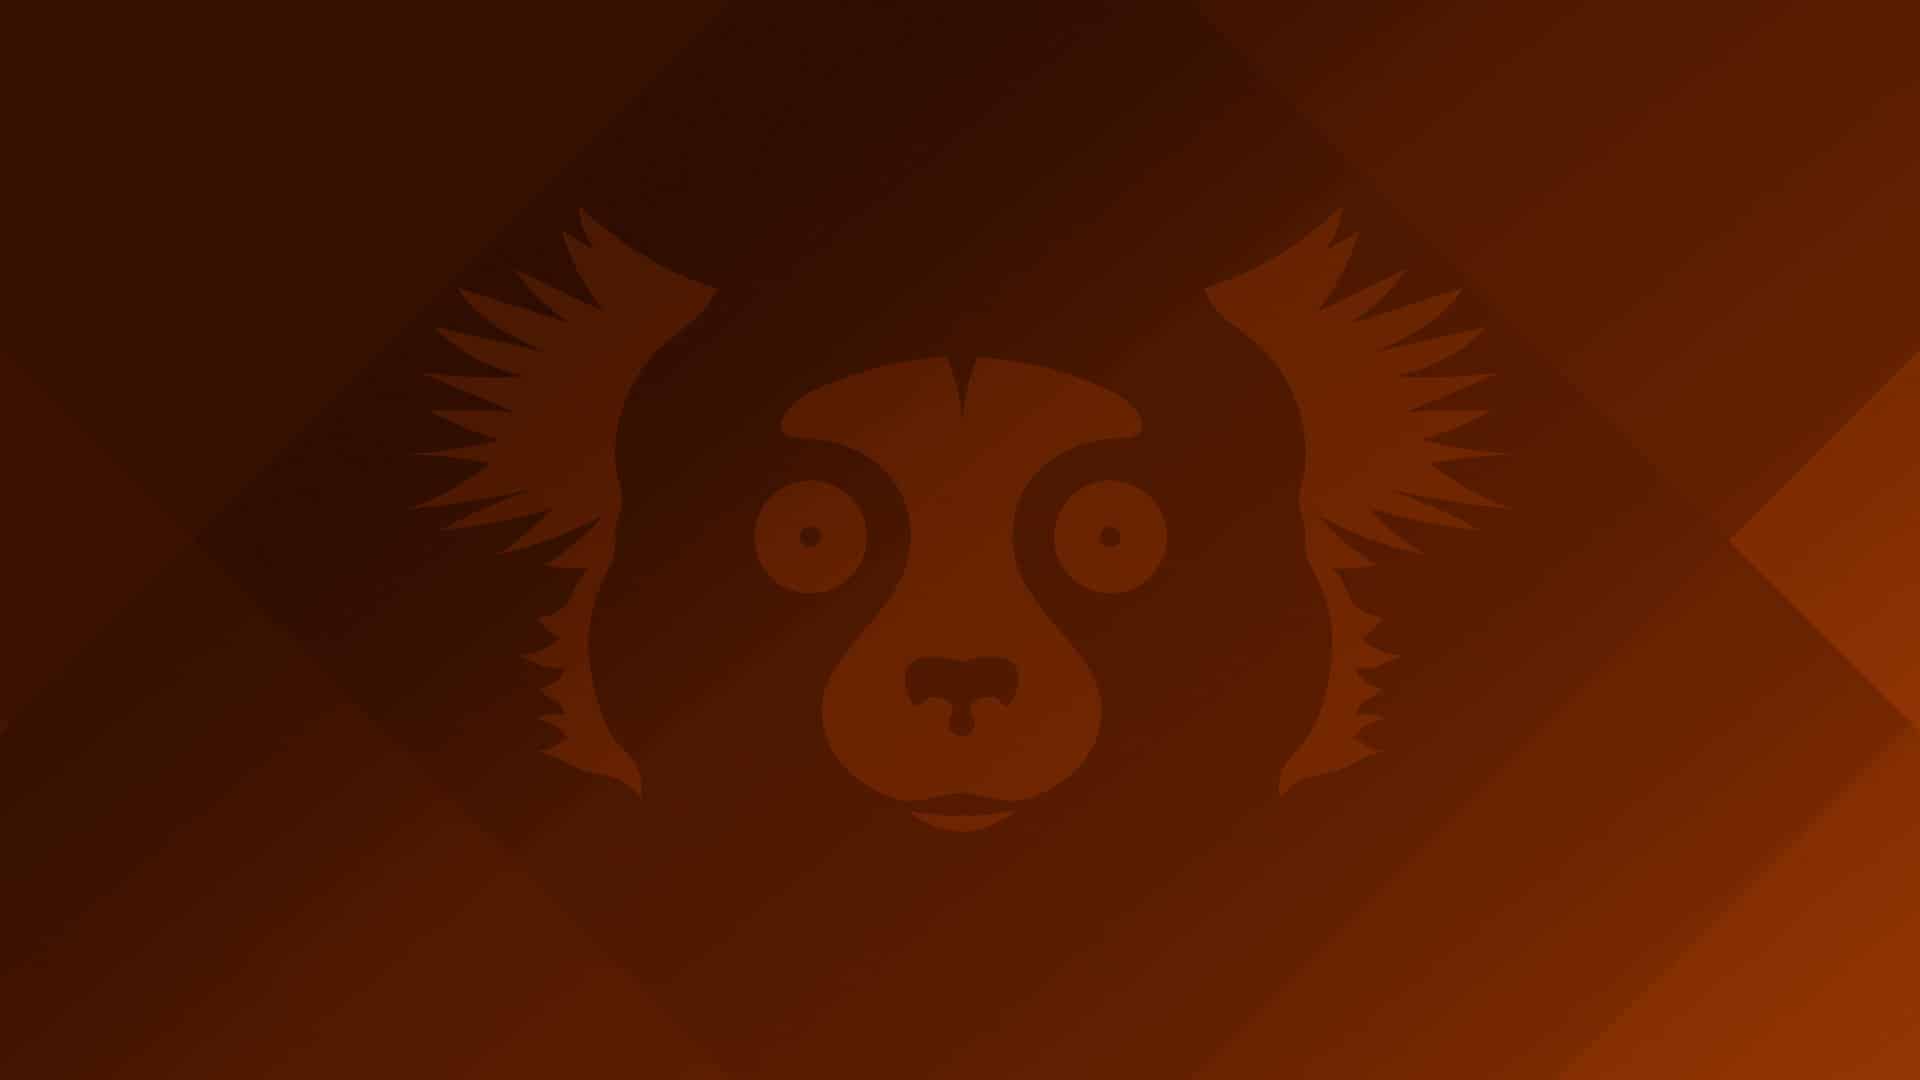 Ubuntu 21.10 Impish Indri chega ao fim da vida útil